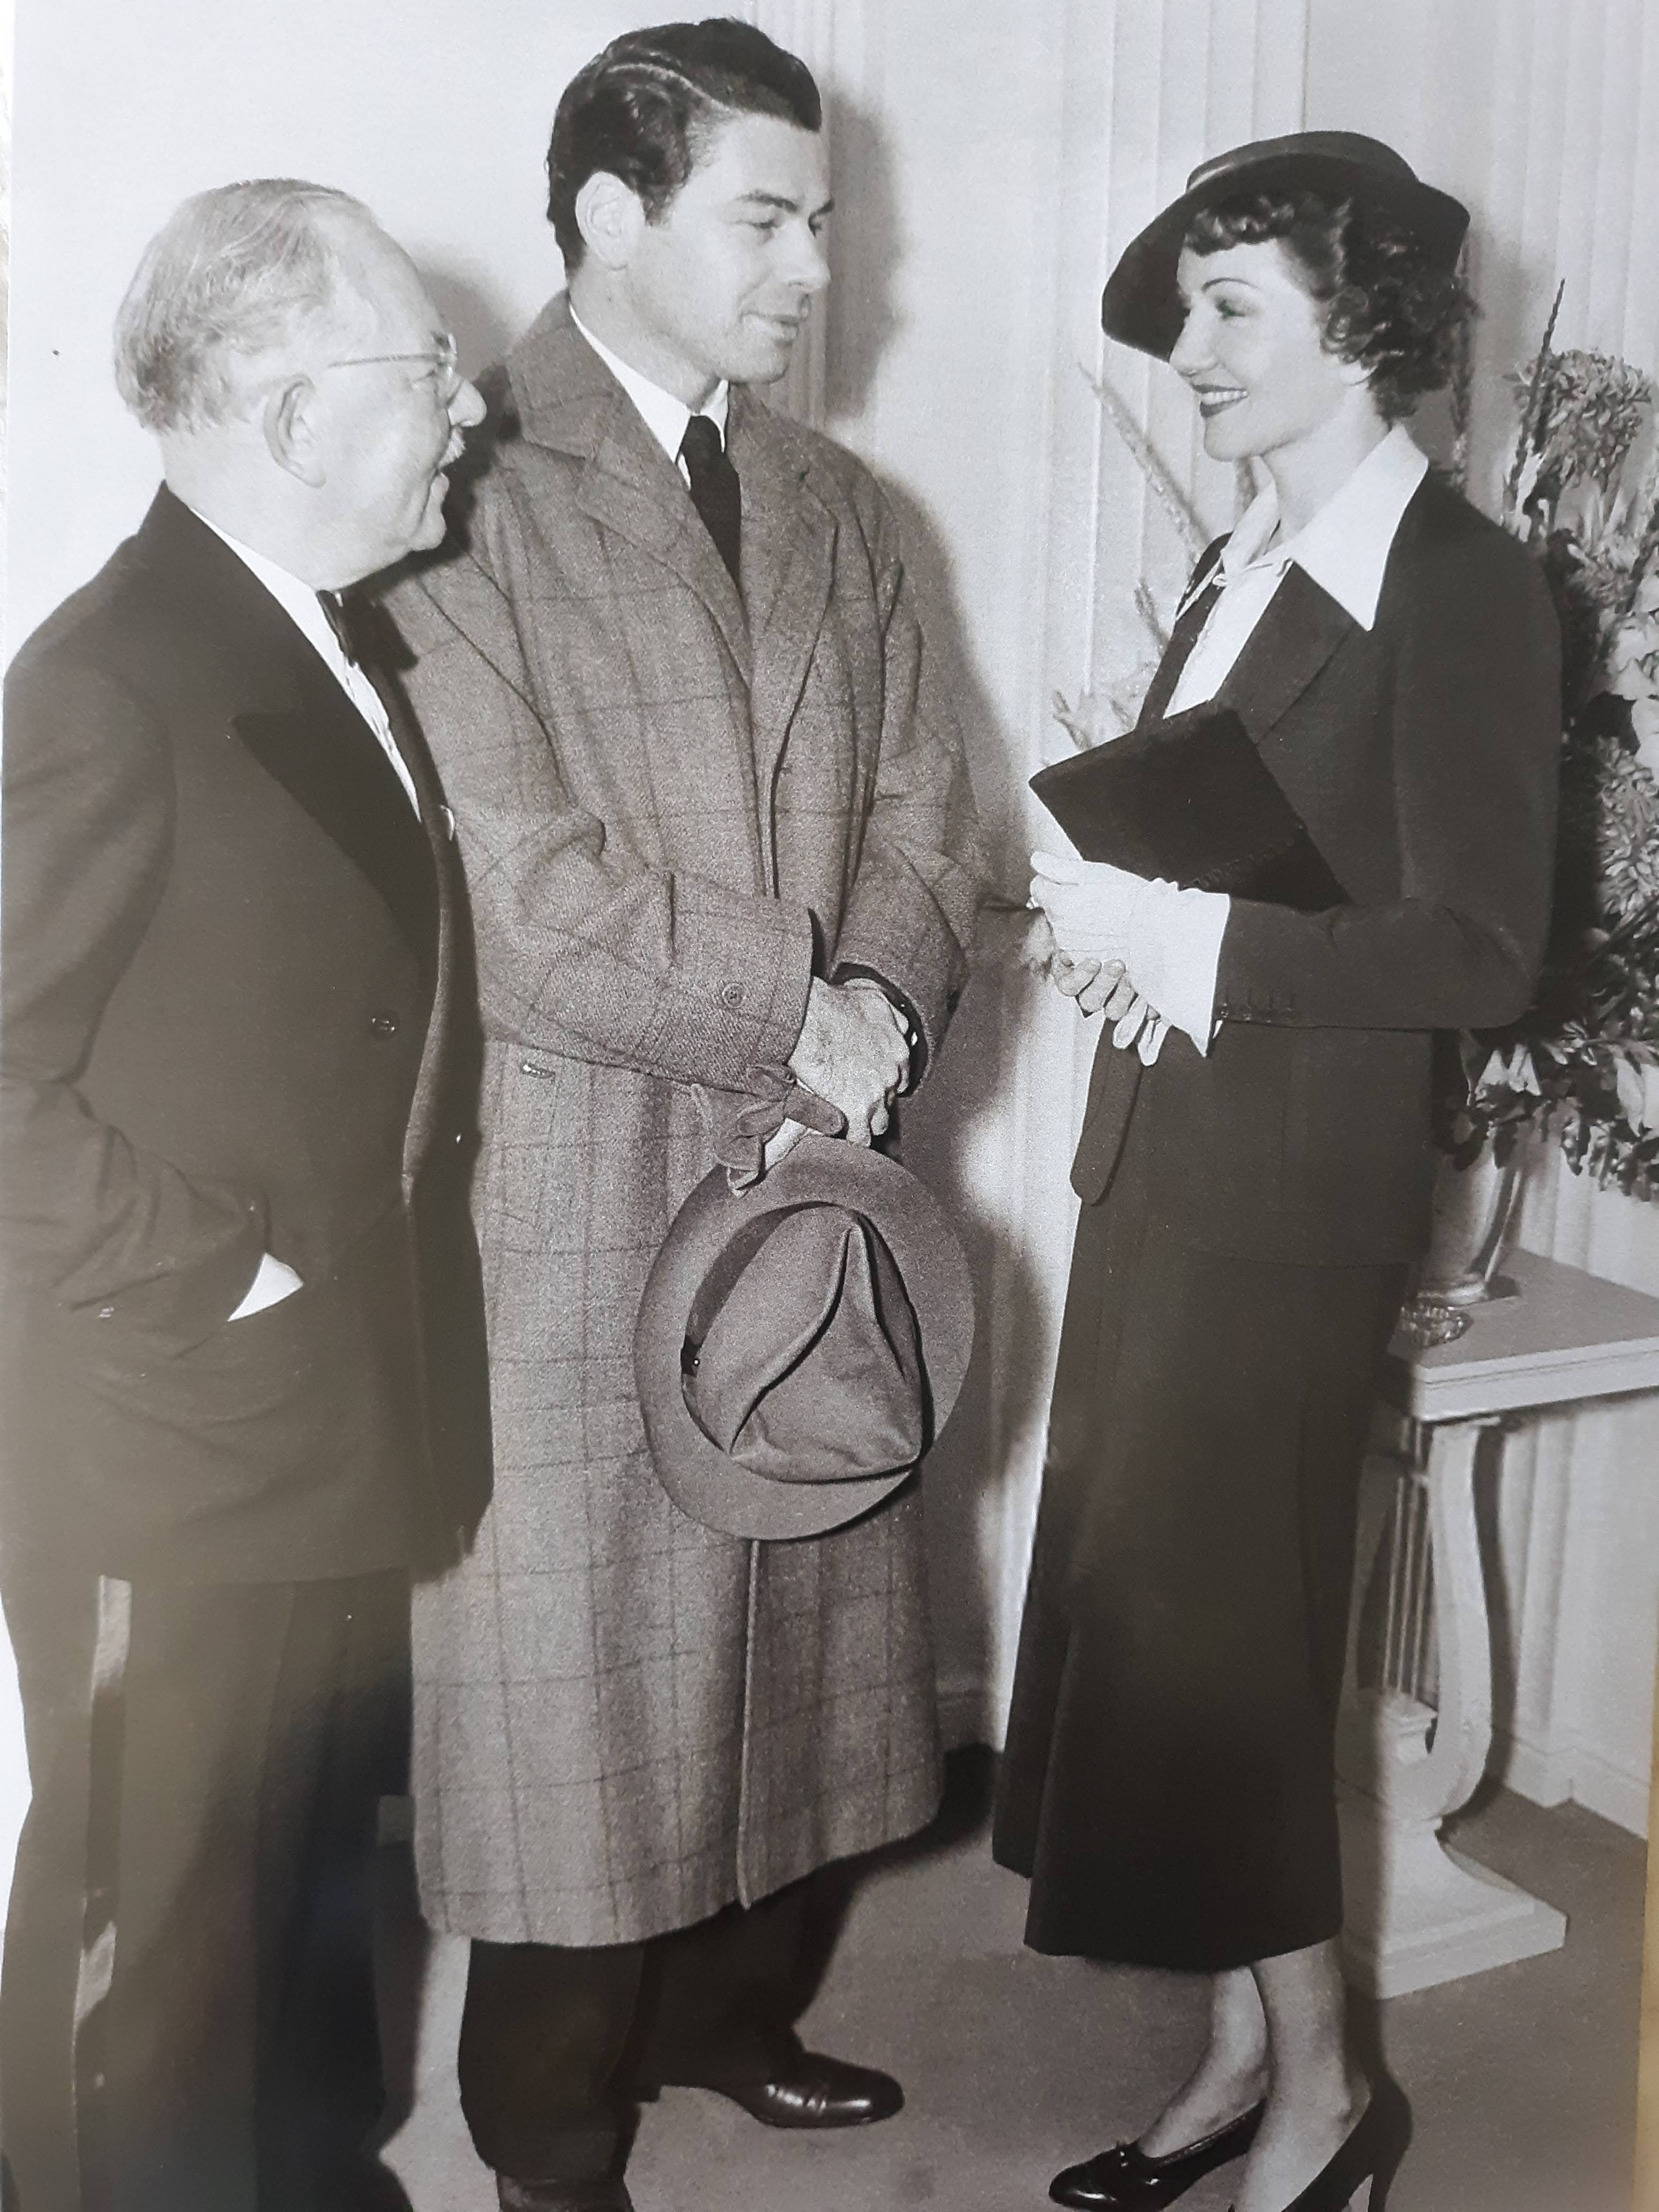 Paul Muni and Claudette Colbert. Circa 1930's